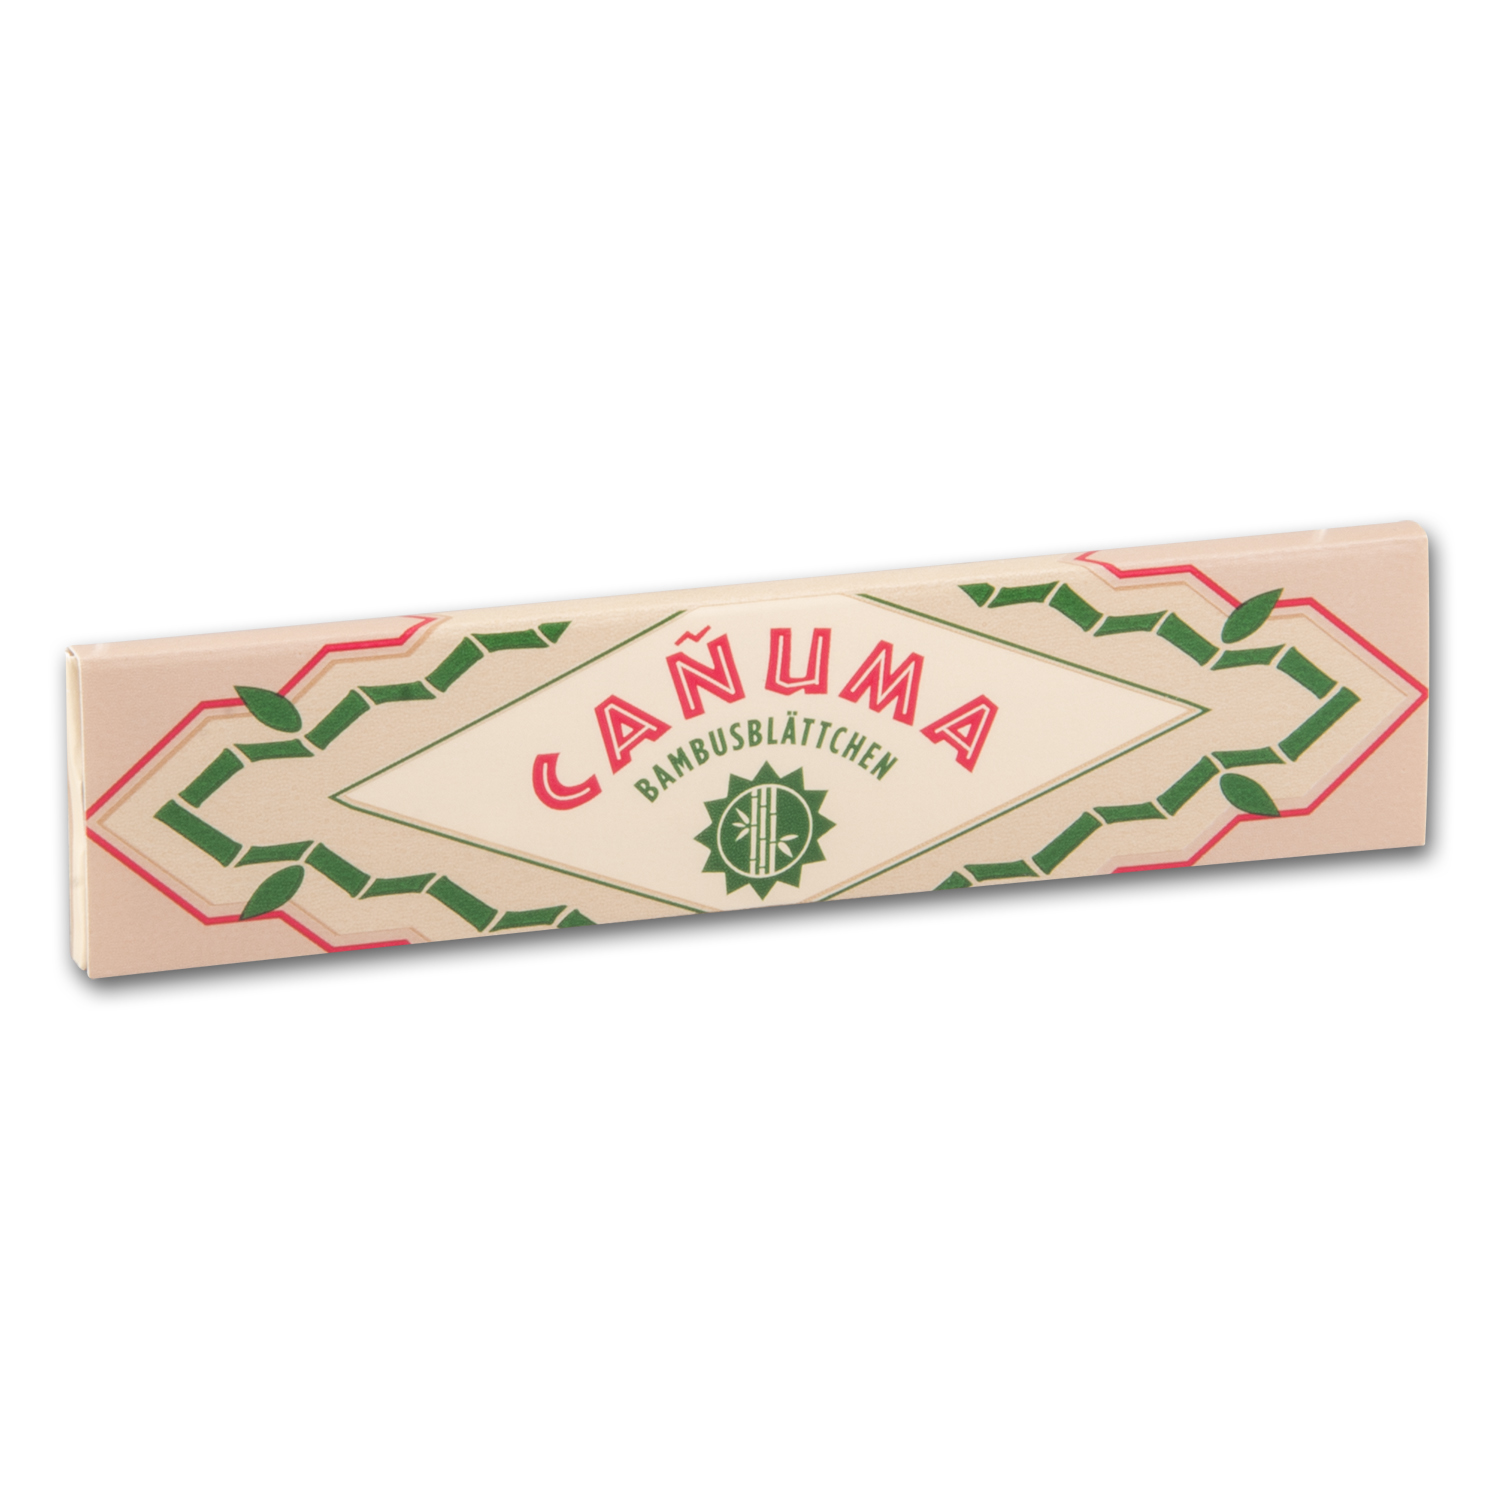 CANUMA by Rizla Bambusblättchen King Size Slims Zigarettenpapier 50x32